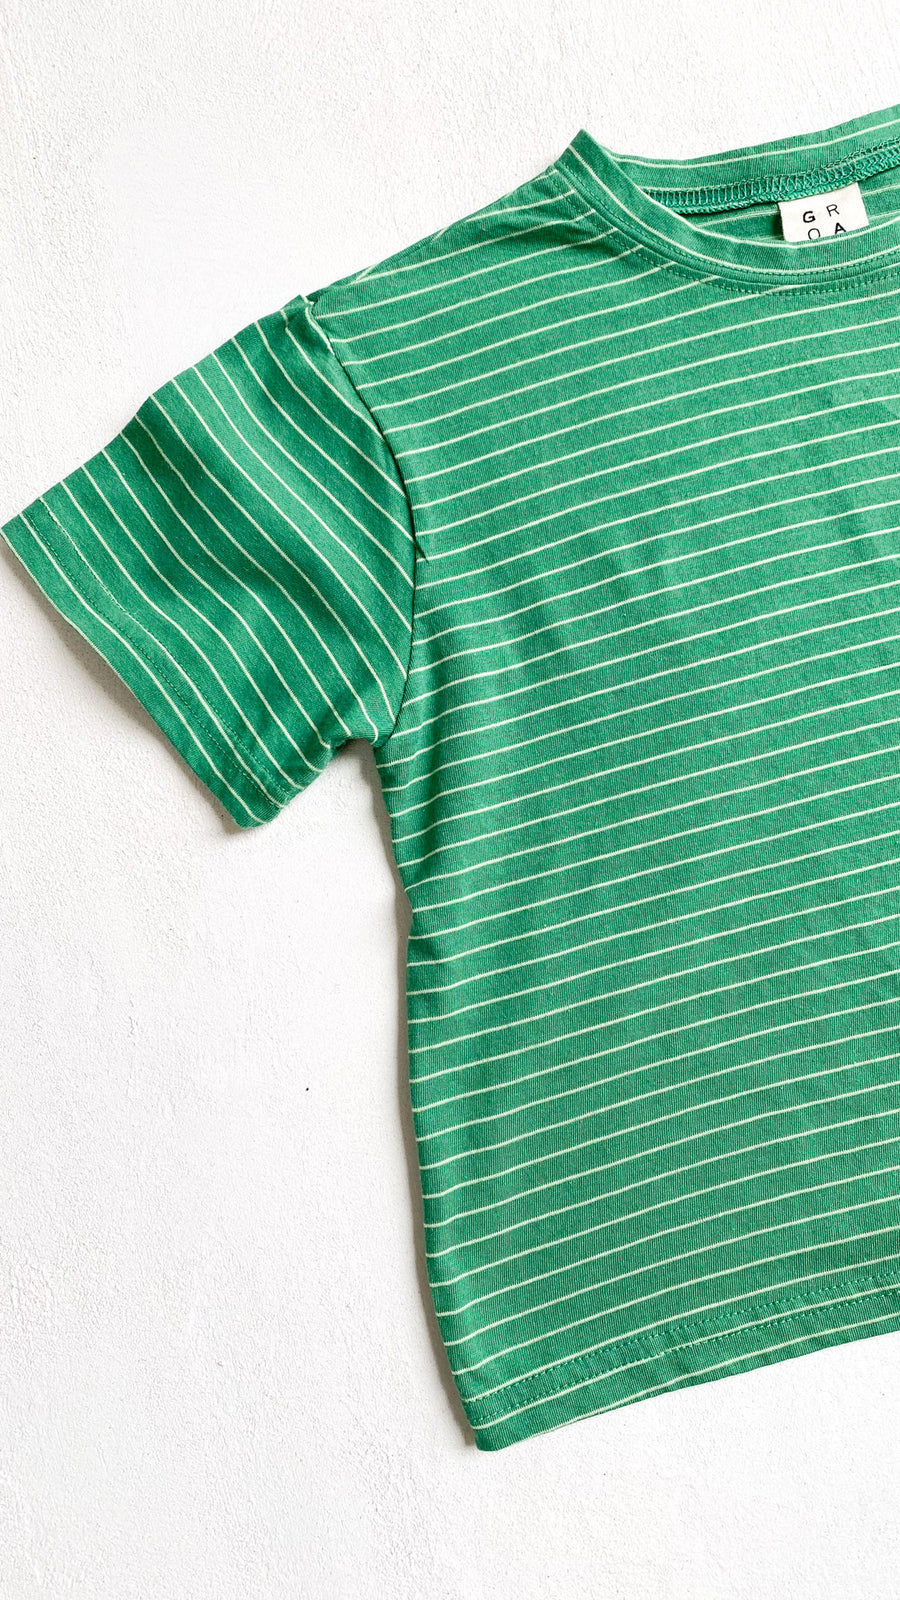 Green stripes T-shirt